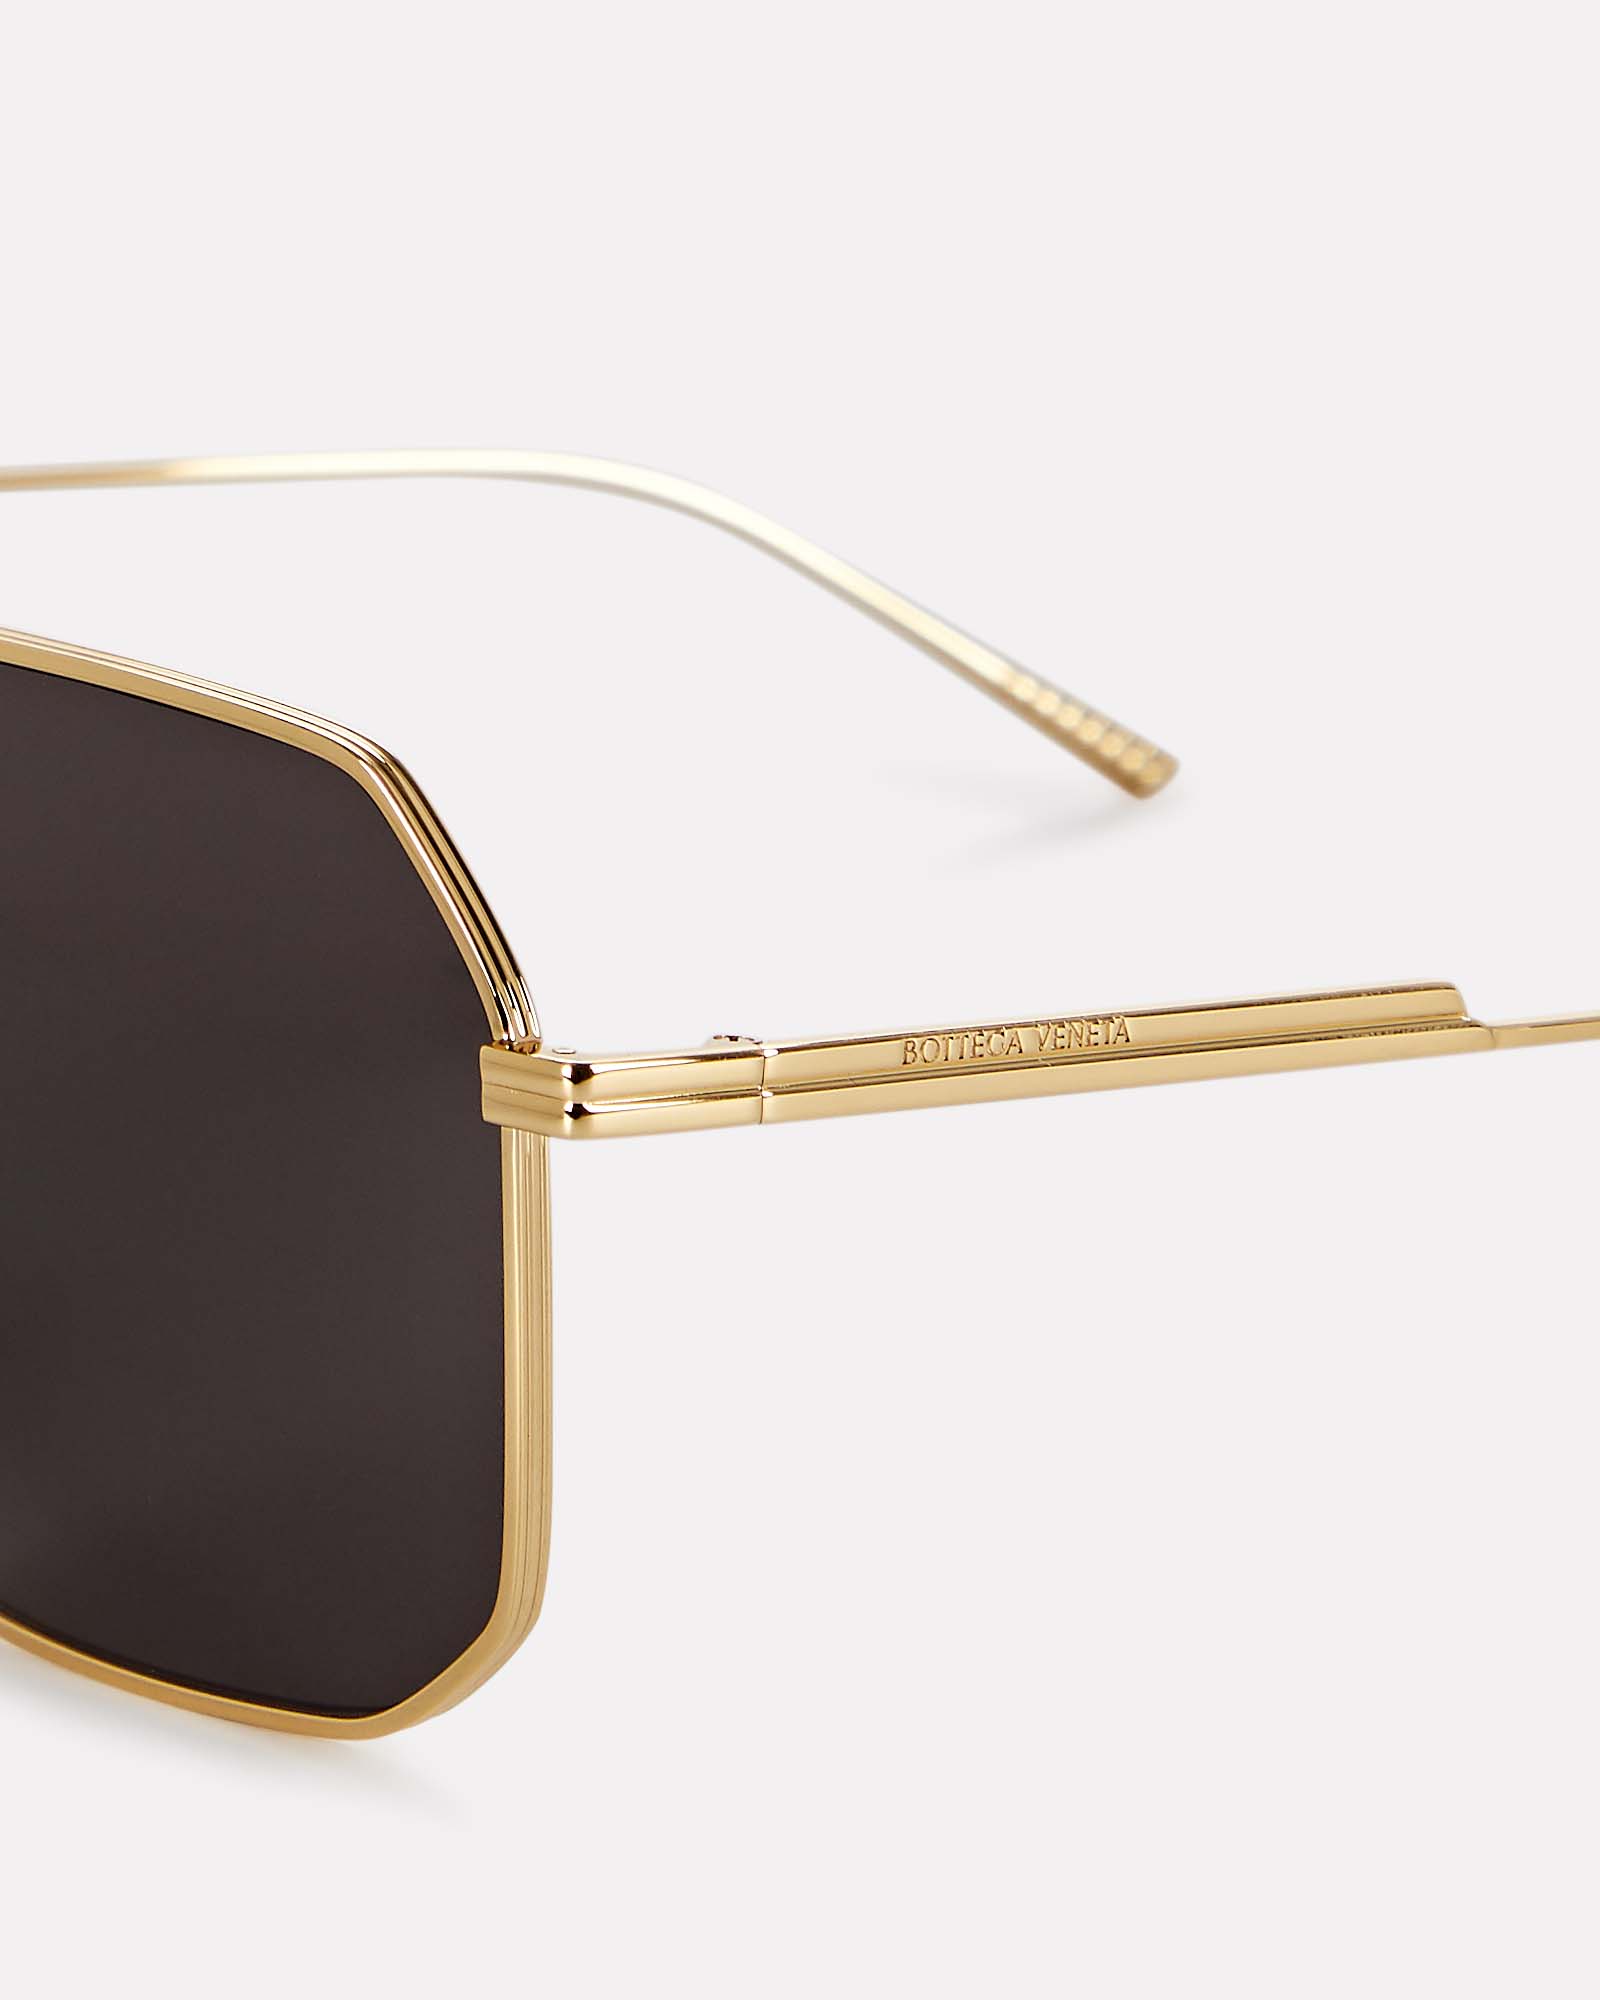 Bottega Veneta Wire Rounded Square Sunglasses | INTERMIX®